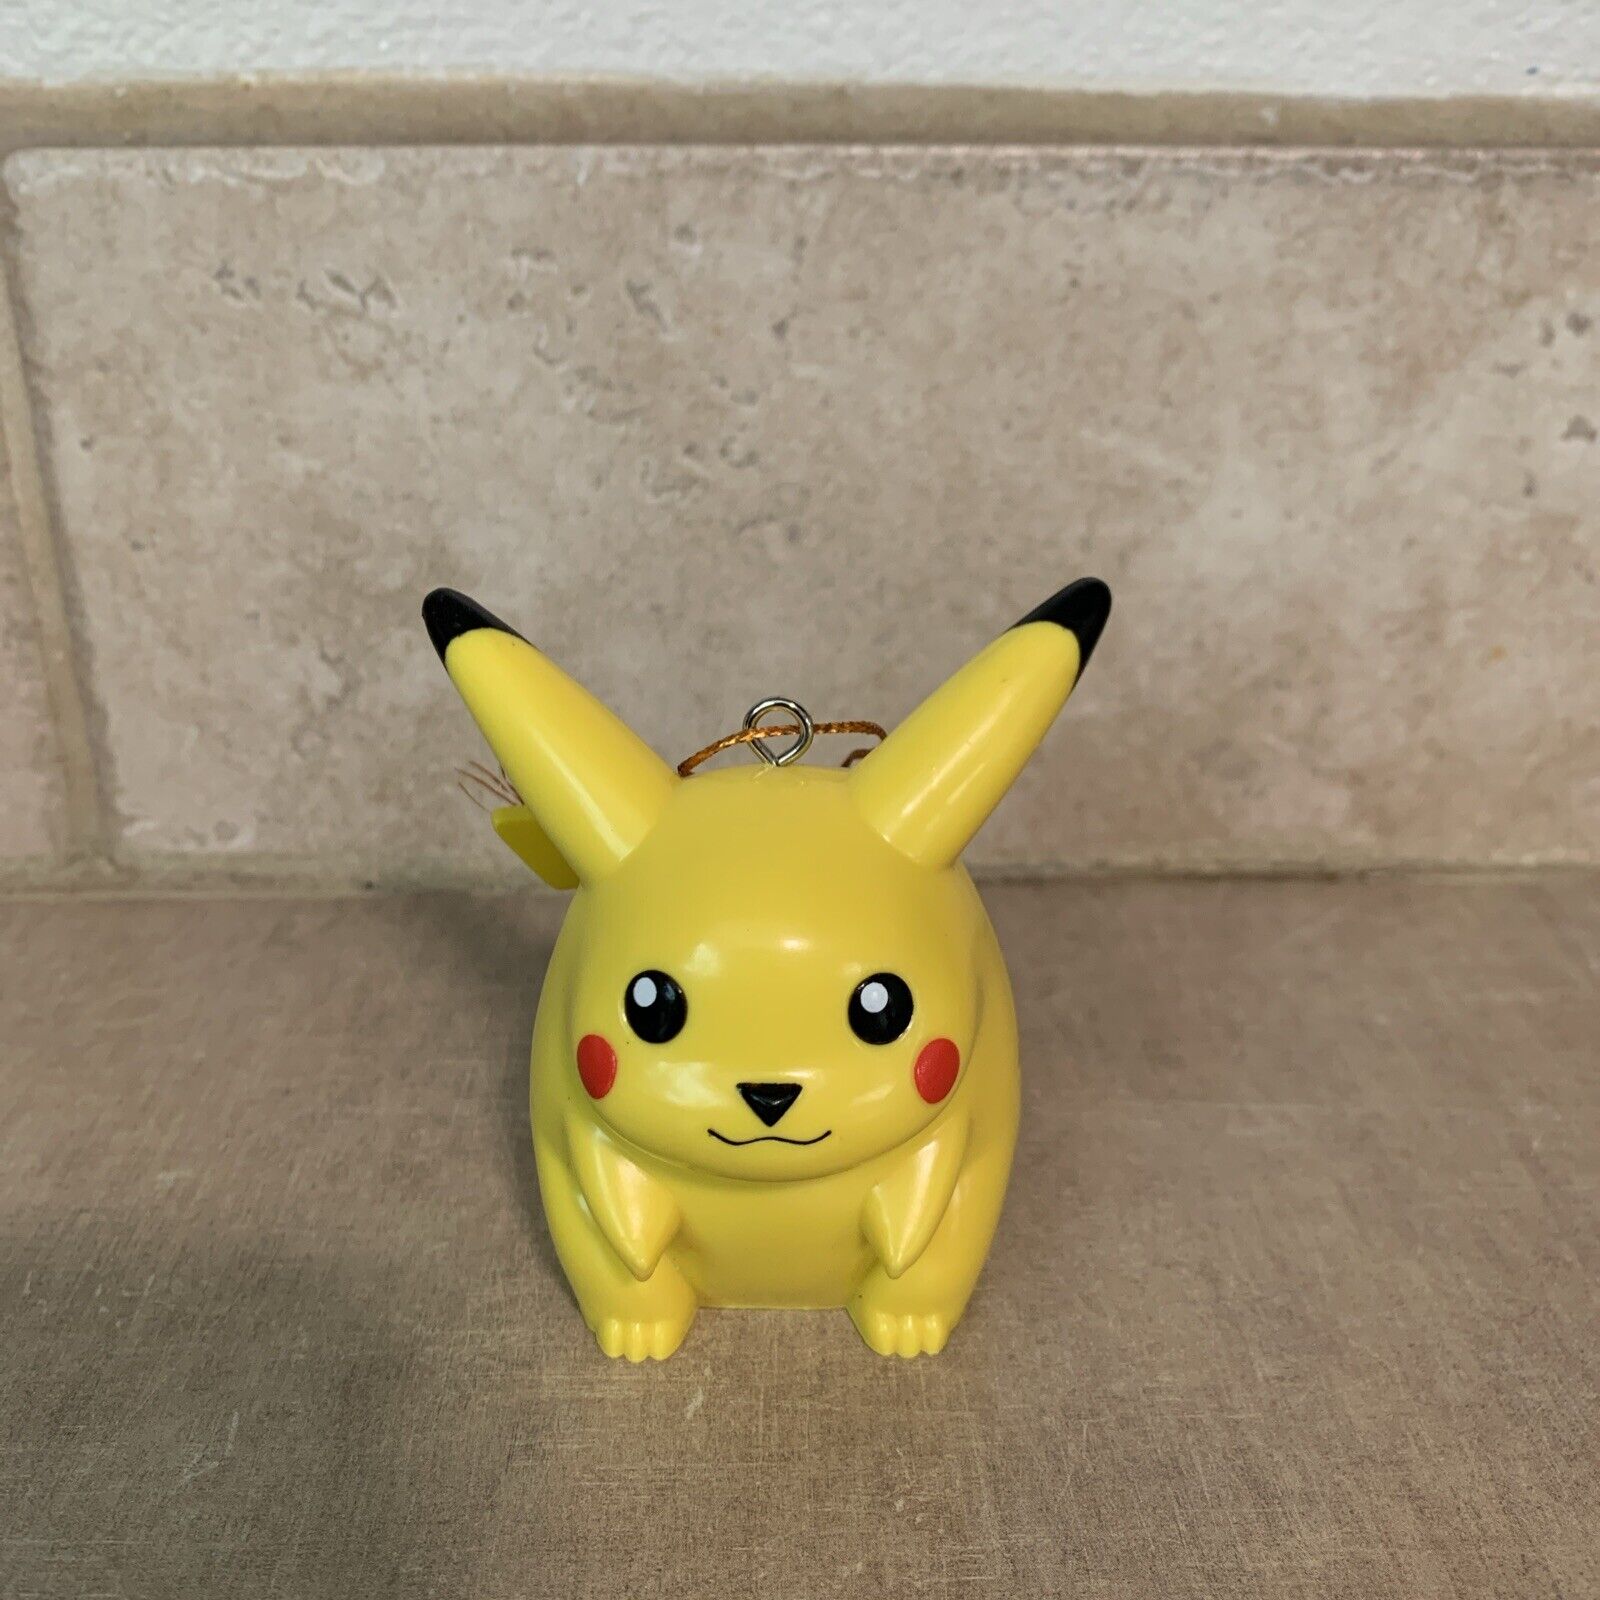 1999 Nintendo Pokemon Pikachu Figure 3” Tall Ornament